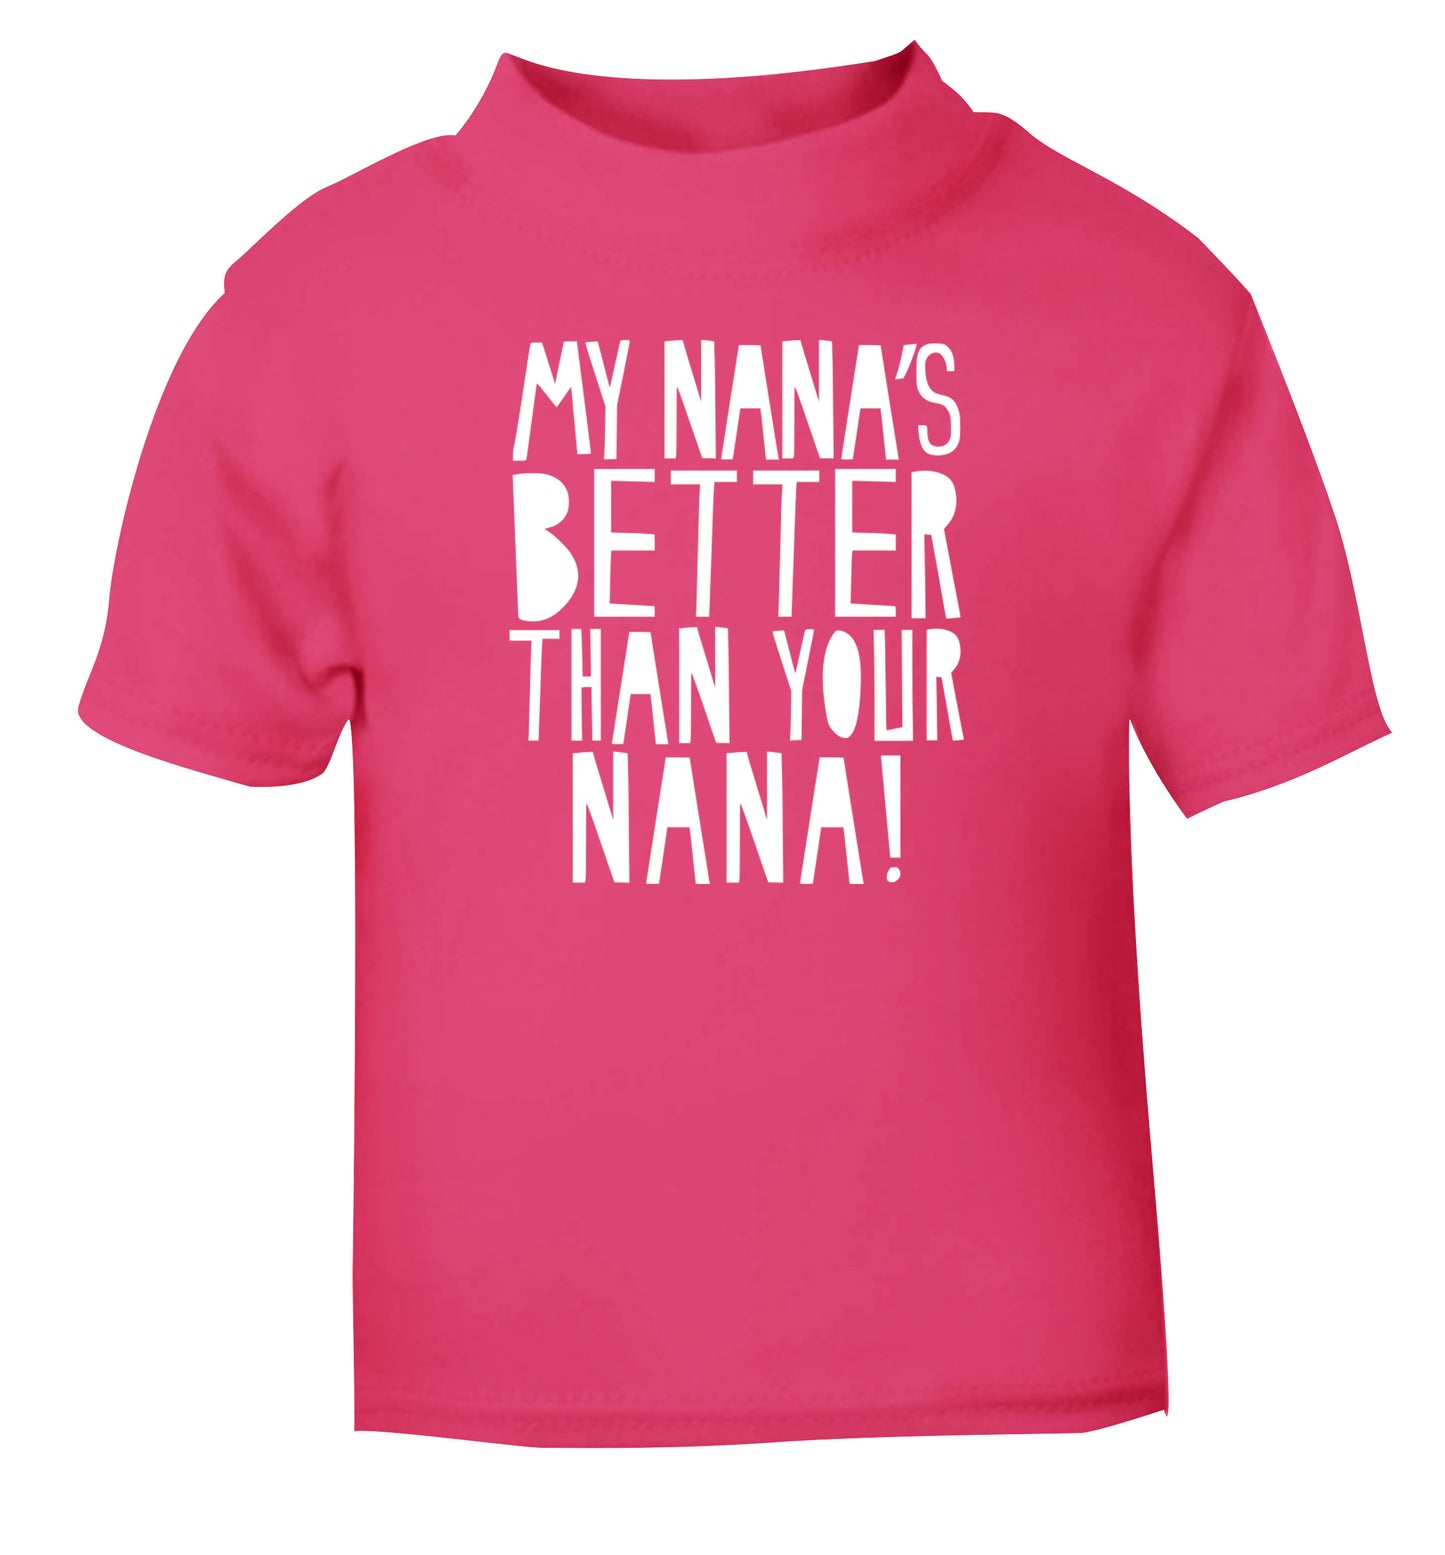 My nana's better than your nana pink Baby Toddler Tshirt 2 Years